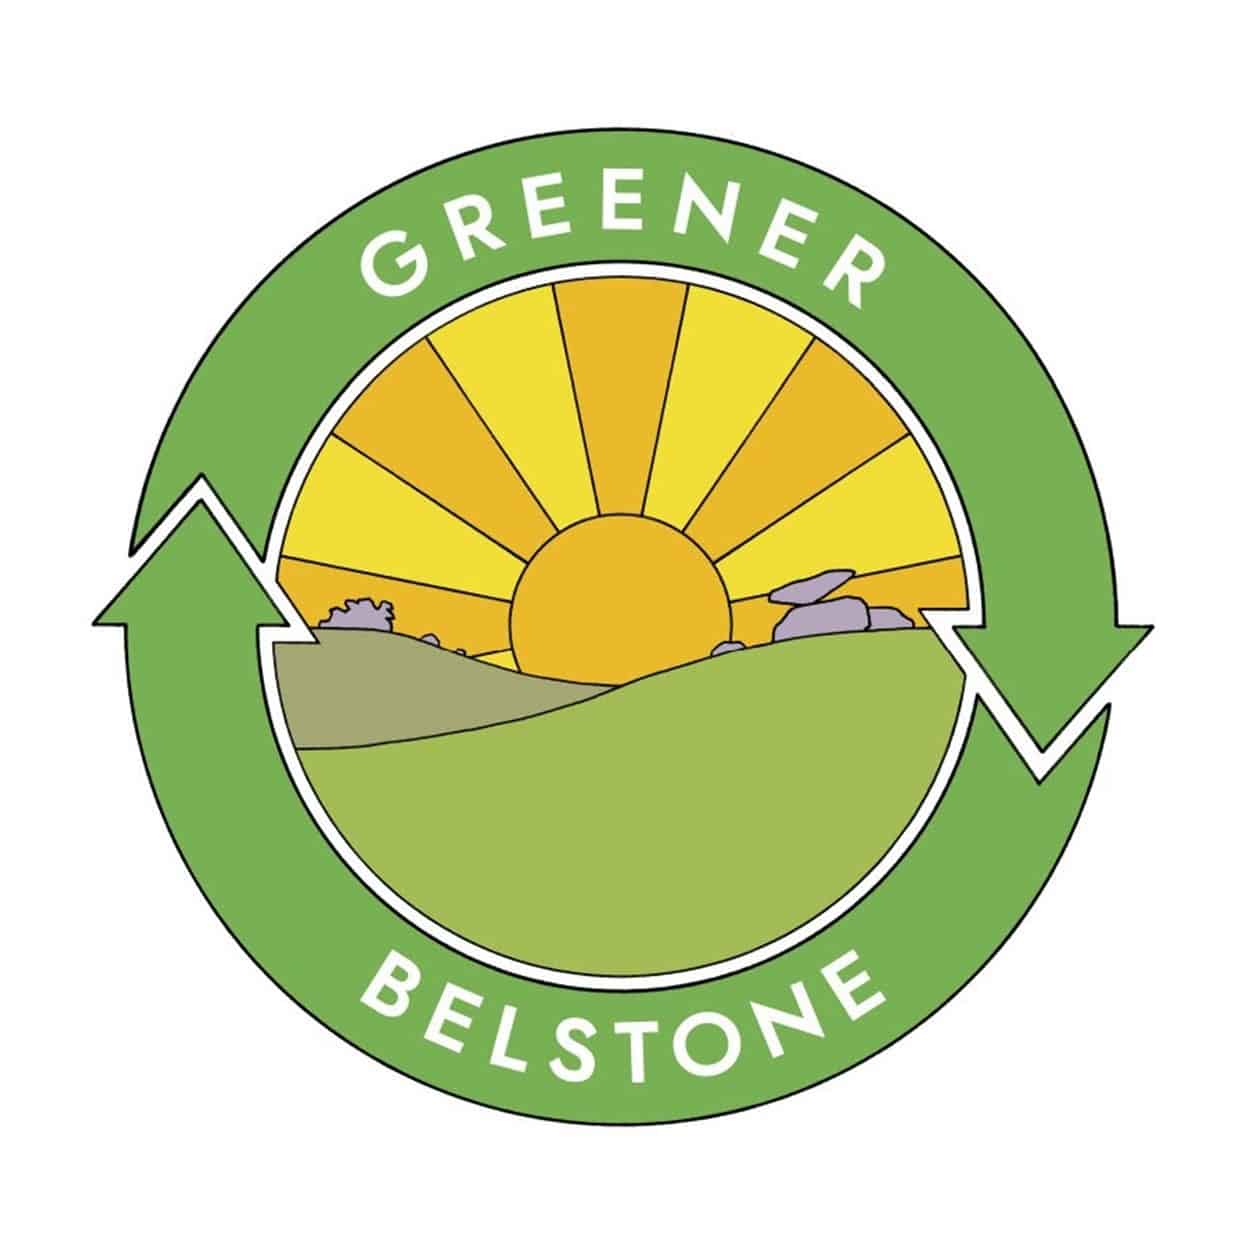 Greener Belstone Logo